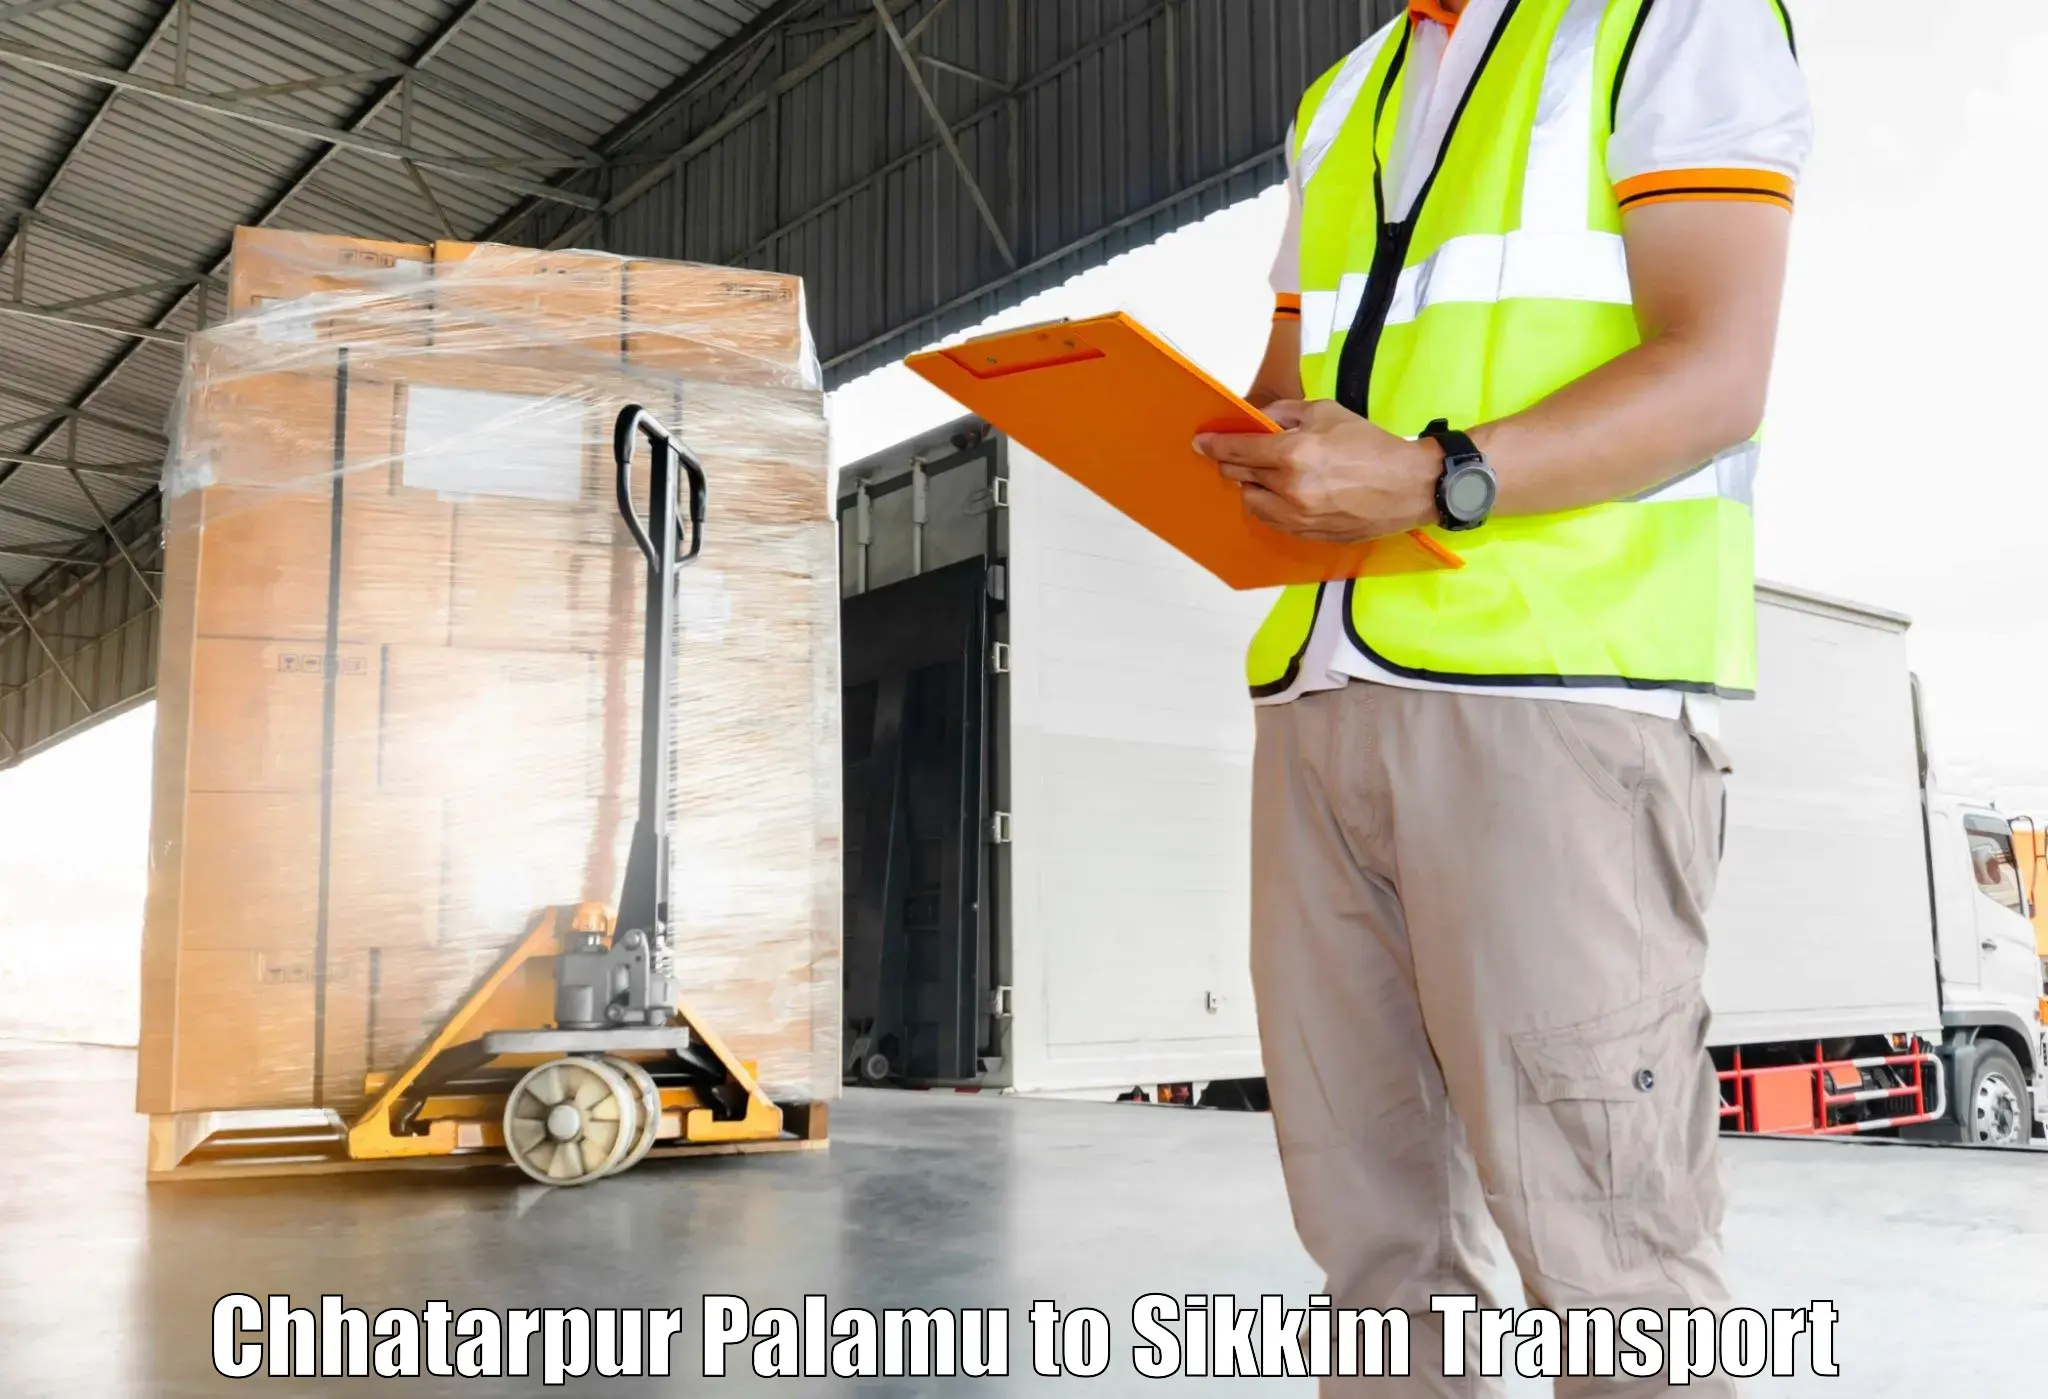 Lorry transport service Chhatarpur Palamu to Pelling